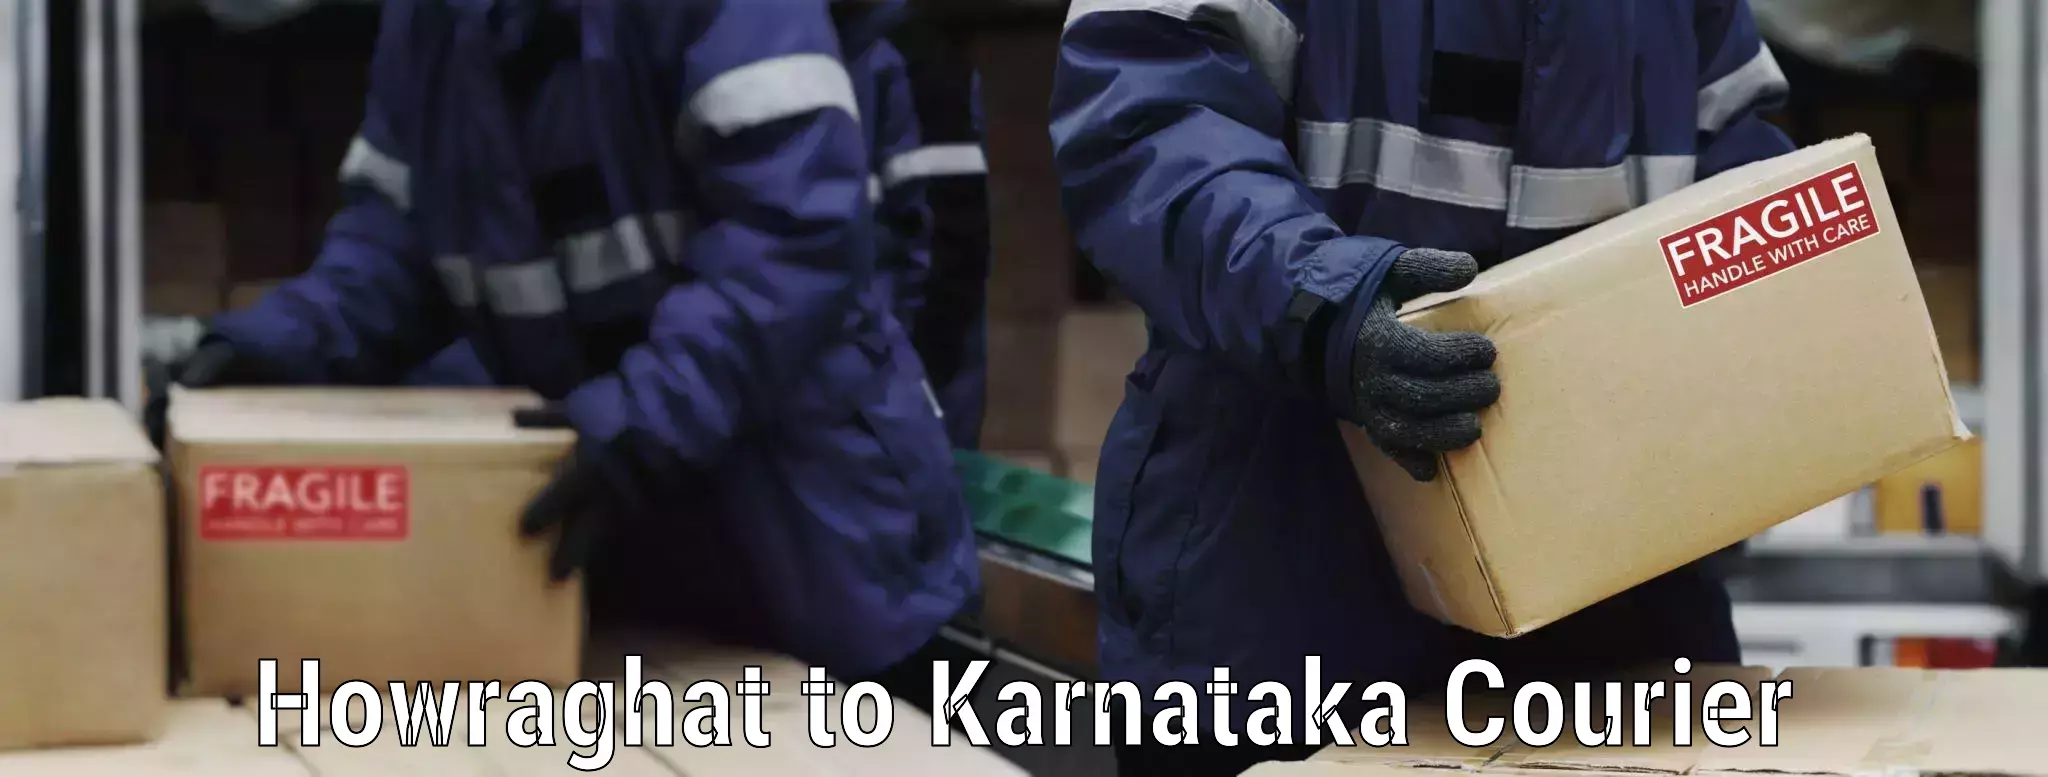 Moving and packing experts Howraghat to Karnataka